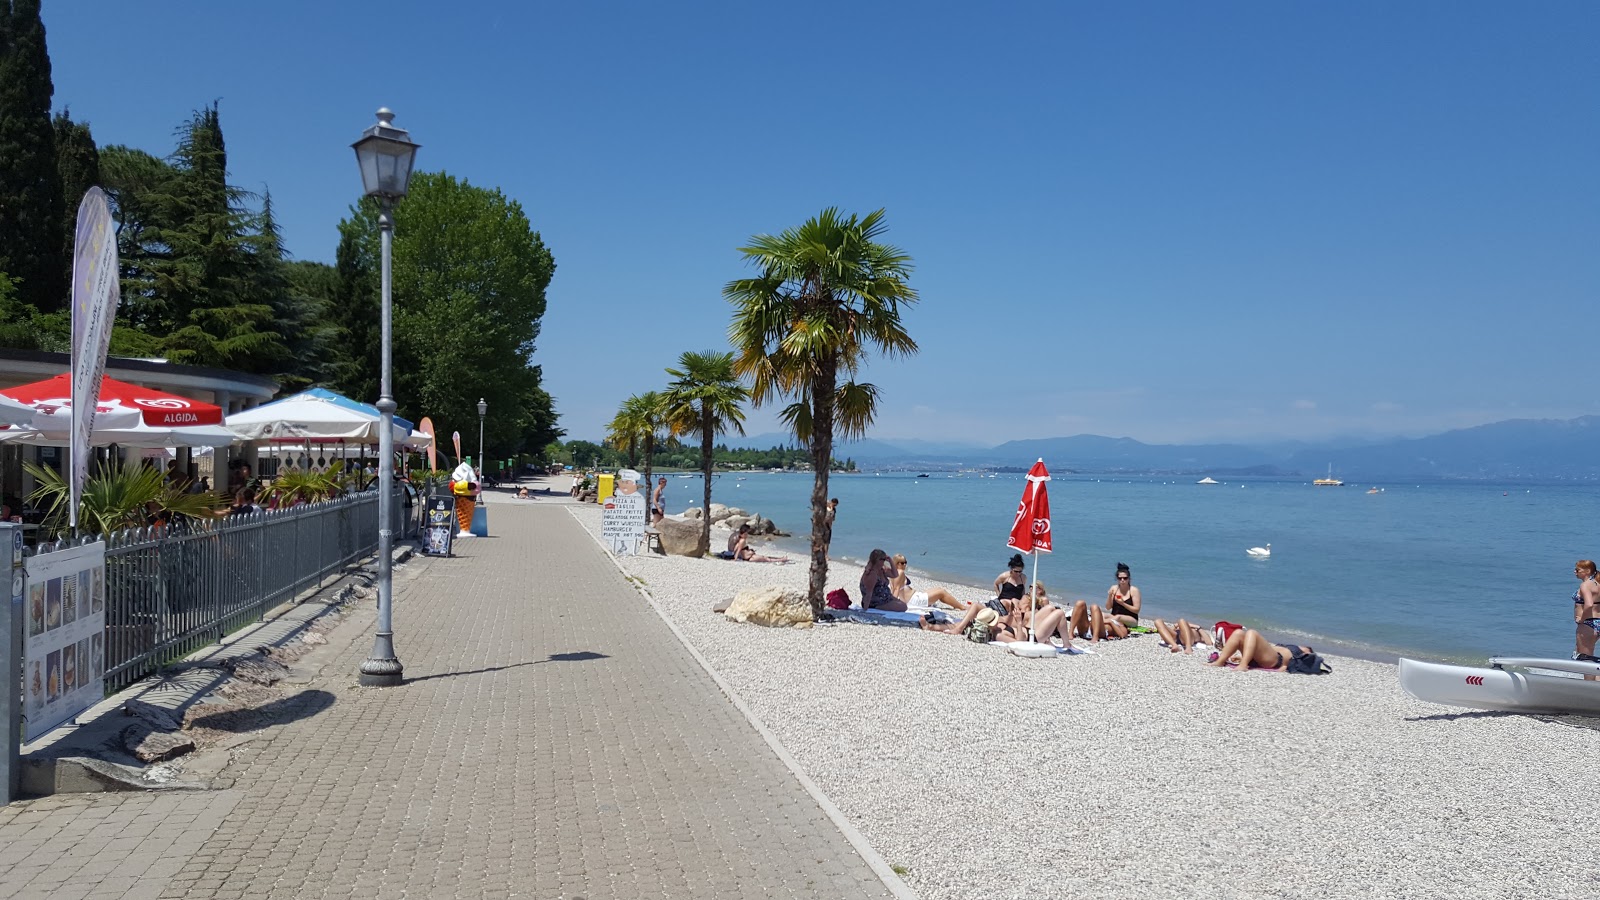 Fotografija Spiaggia Dei Capuccini z prostorna obala